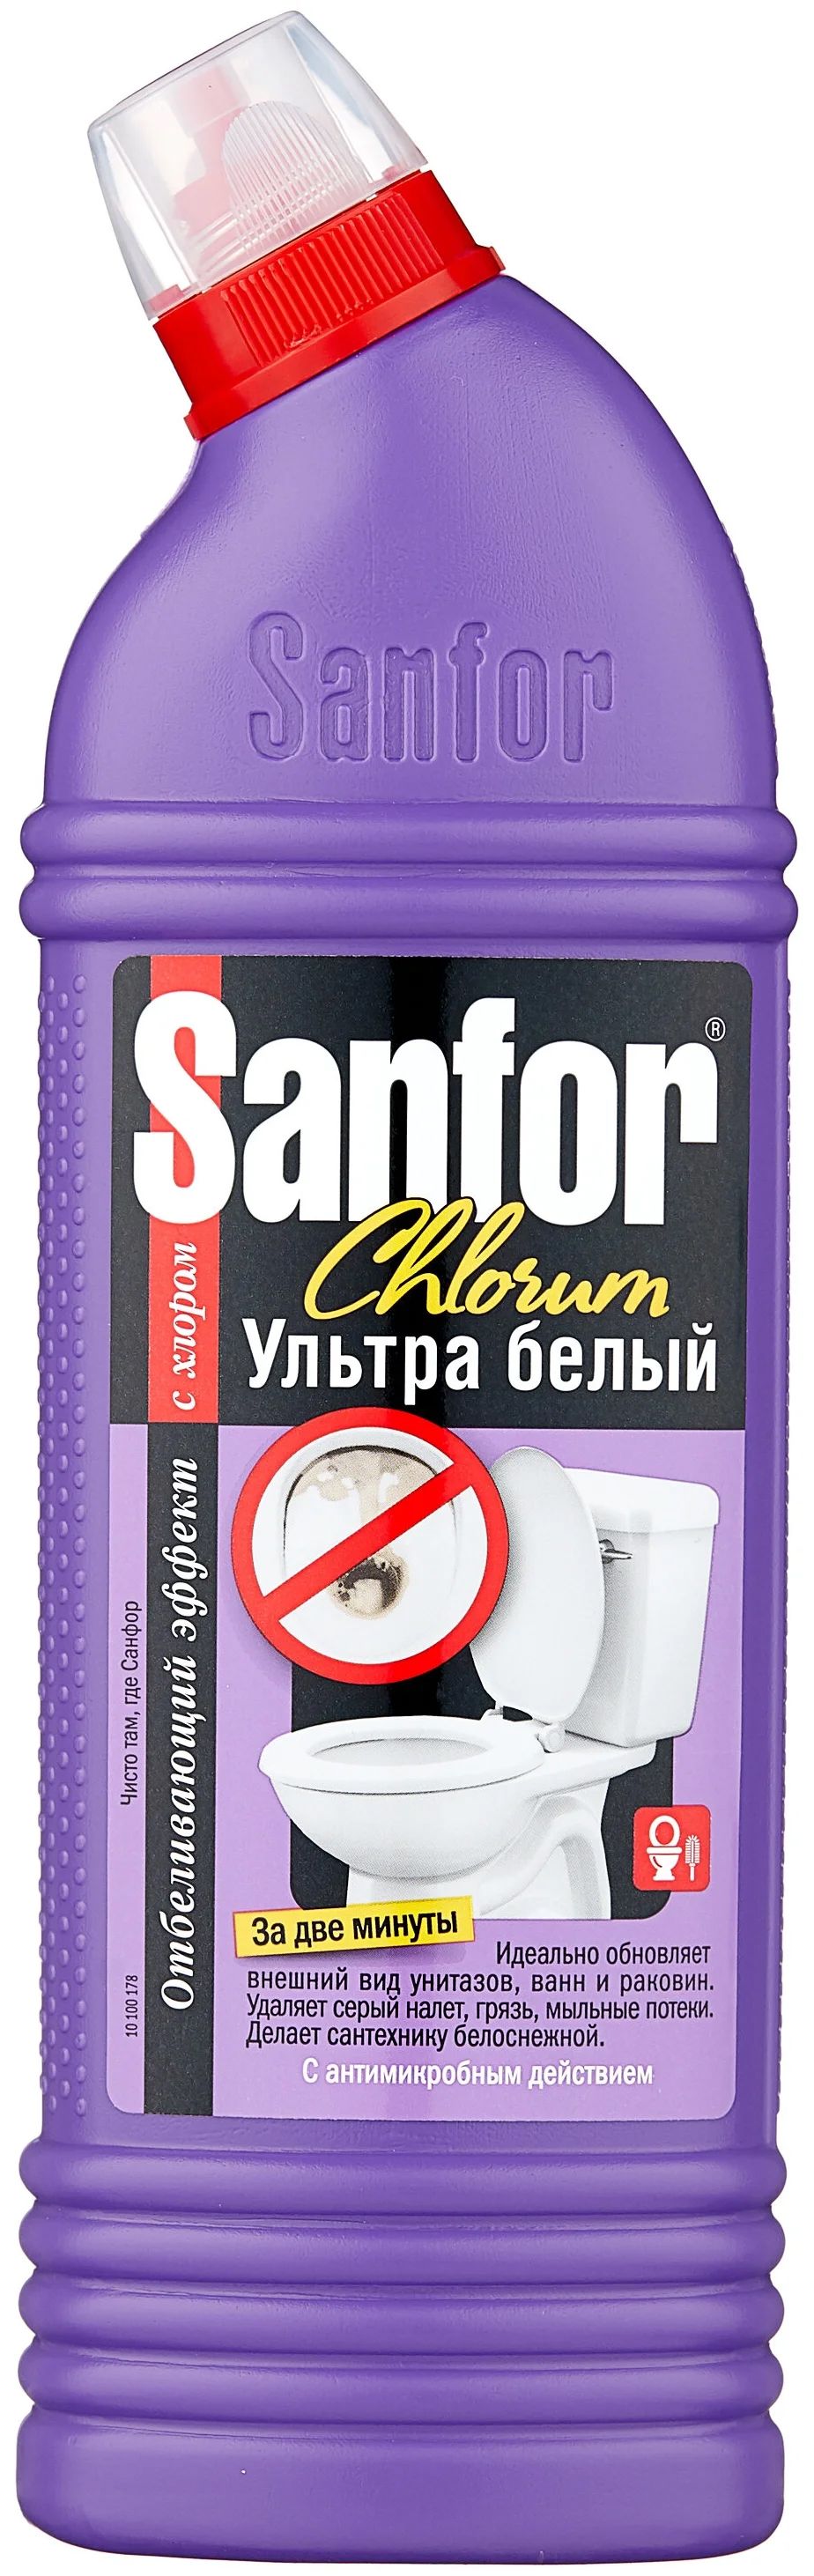 Средство чистящее для сантехники "Sanfor Chlorum Ультра", 750 мл